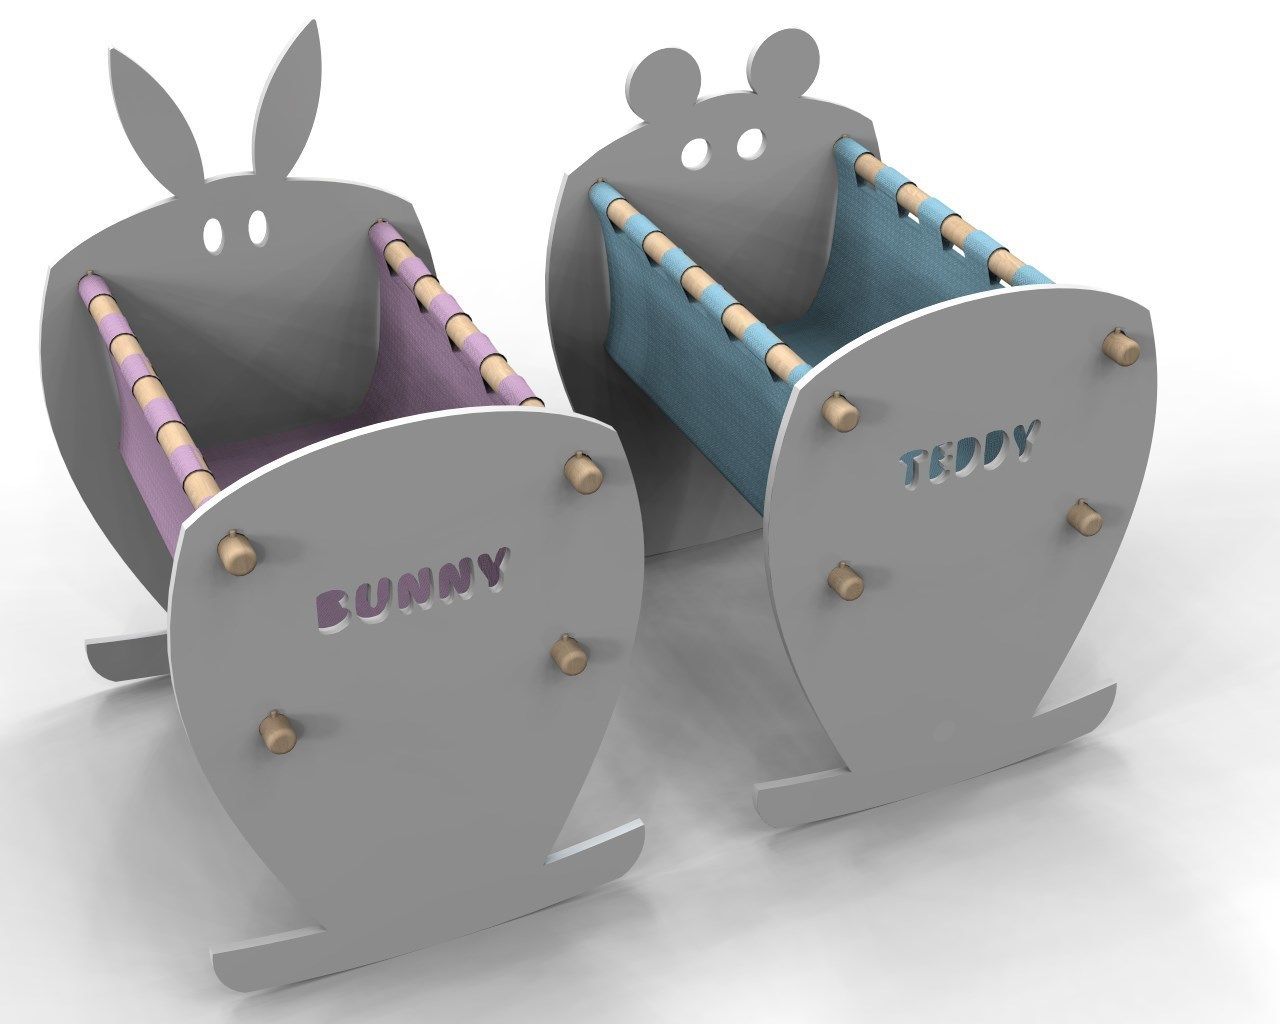 Teddy&Bunny, Nyda Design - Nicola D'Alessandro architetto Nyda Design - Nicola D'Alessandro architetto 嬰兒房/兒童房 床具與床鋪